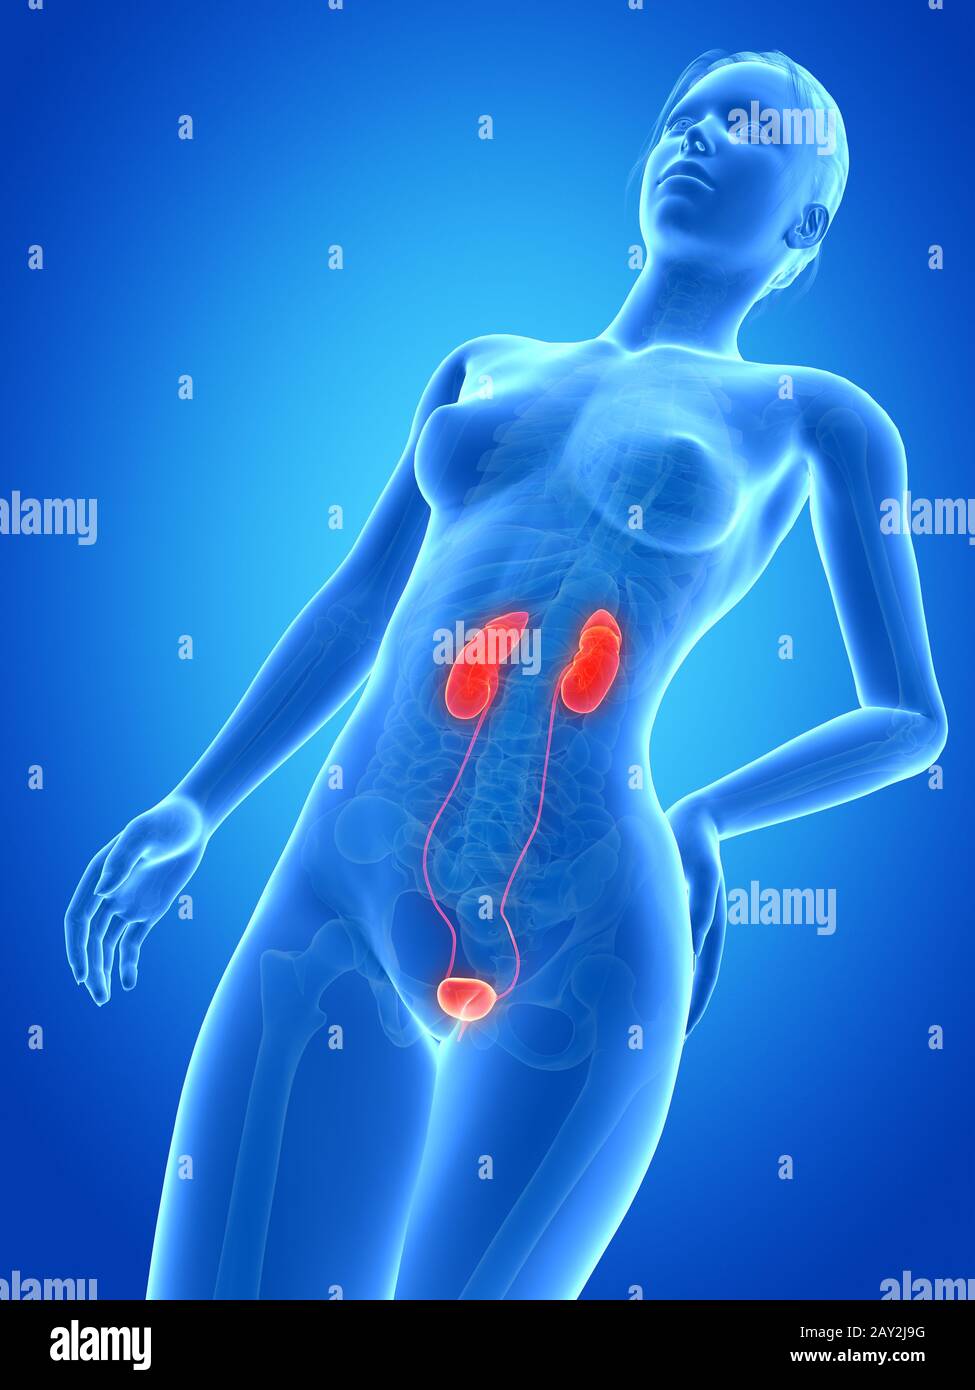 medical 3d illustration - female anatomy - urinary system Stock Photo